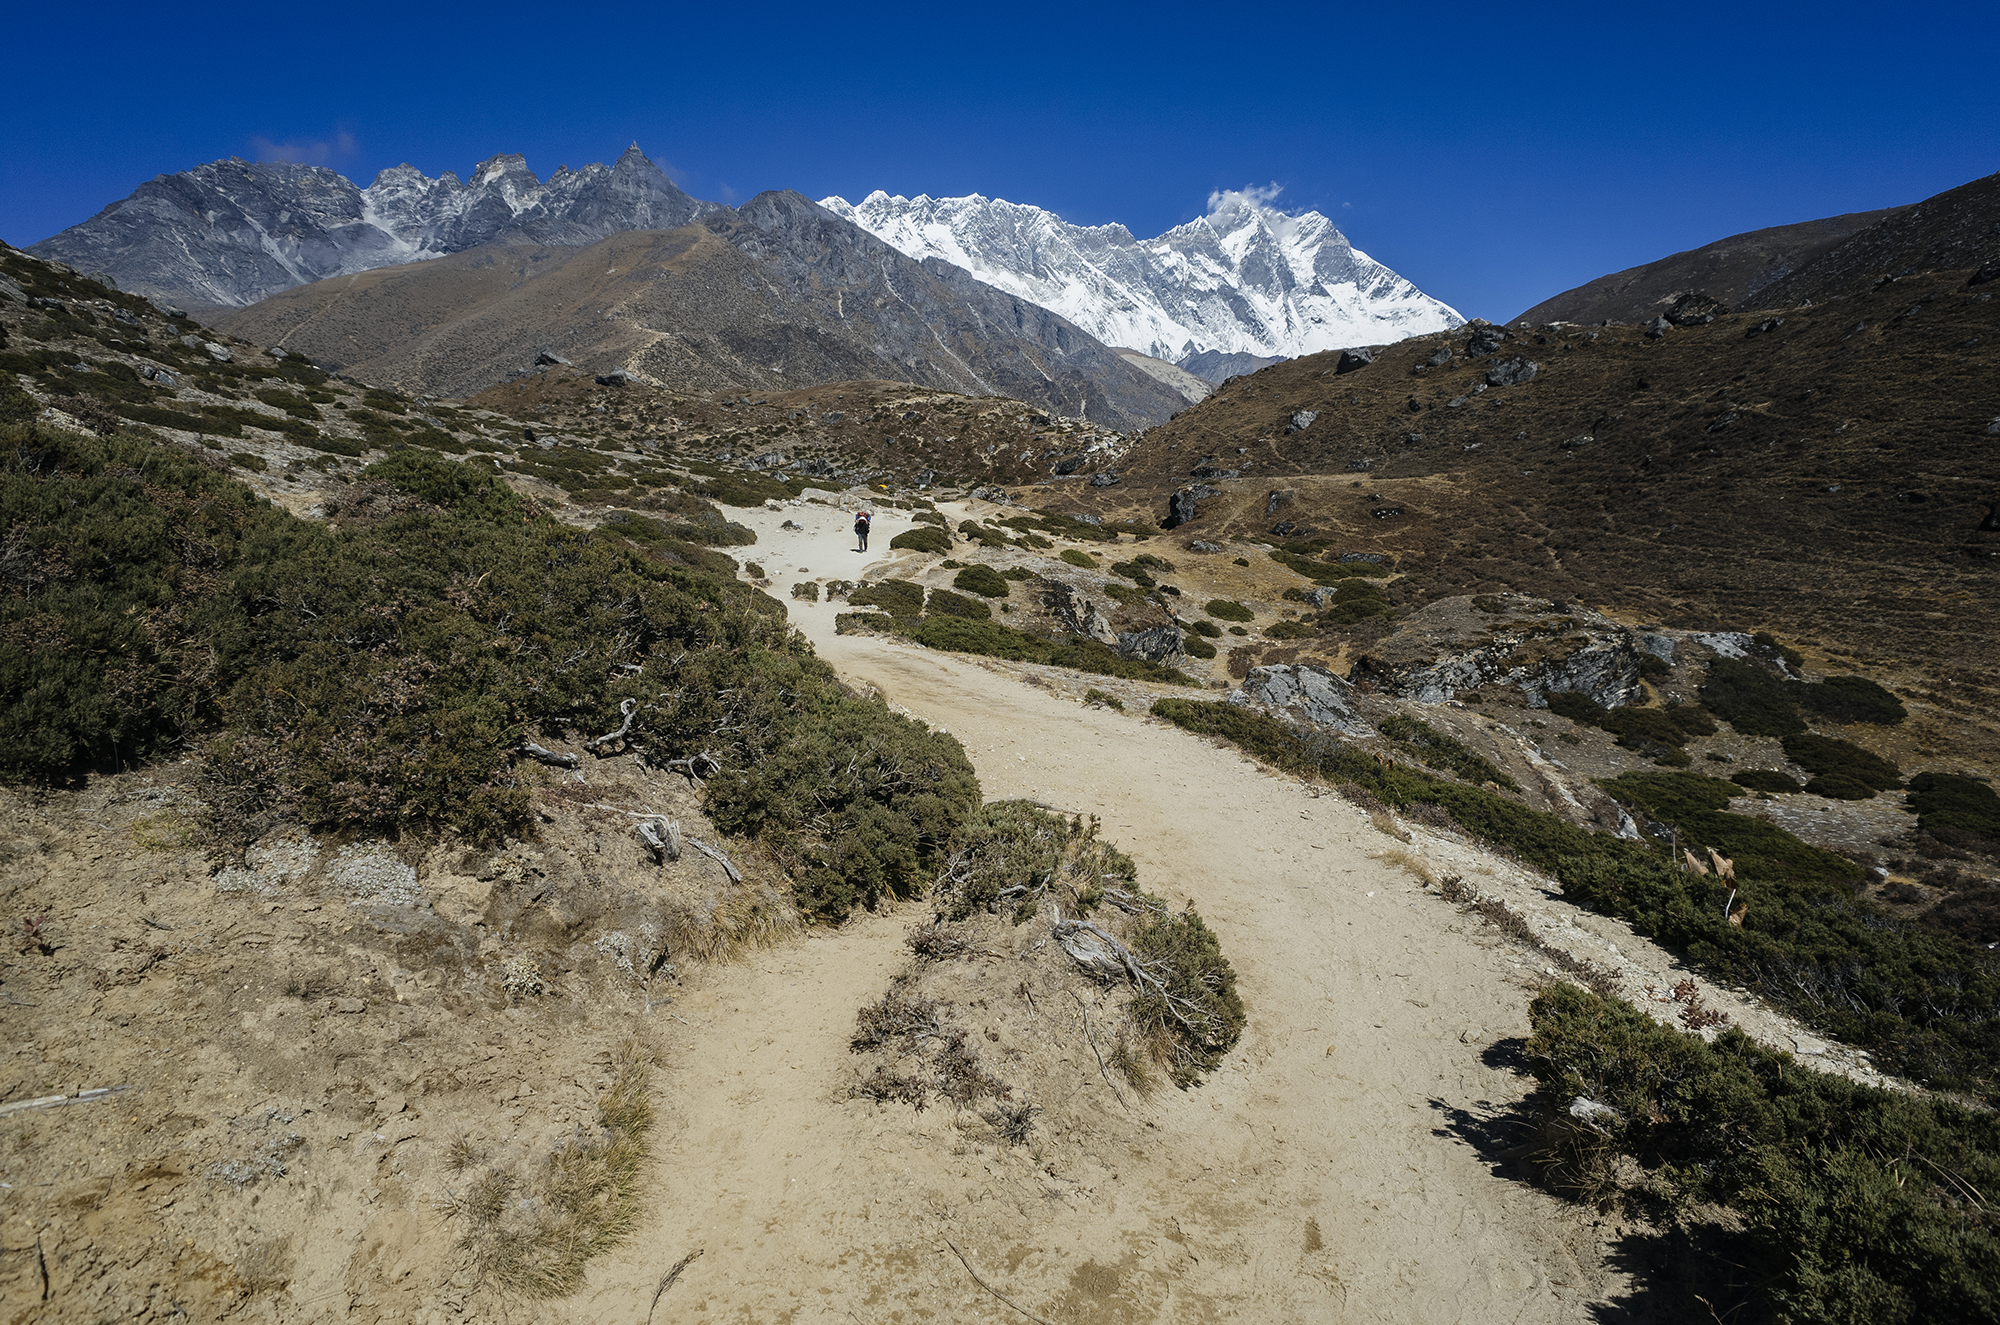 Trekking to Everest Base Camp